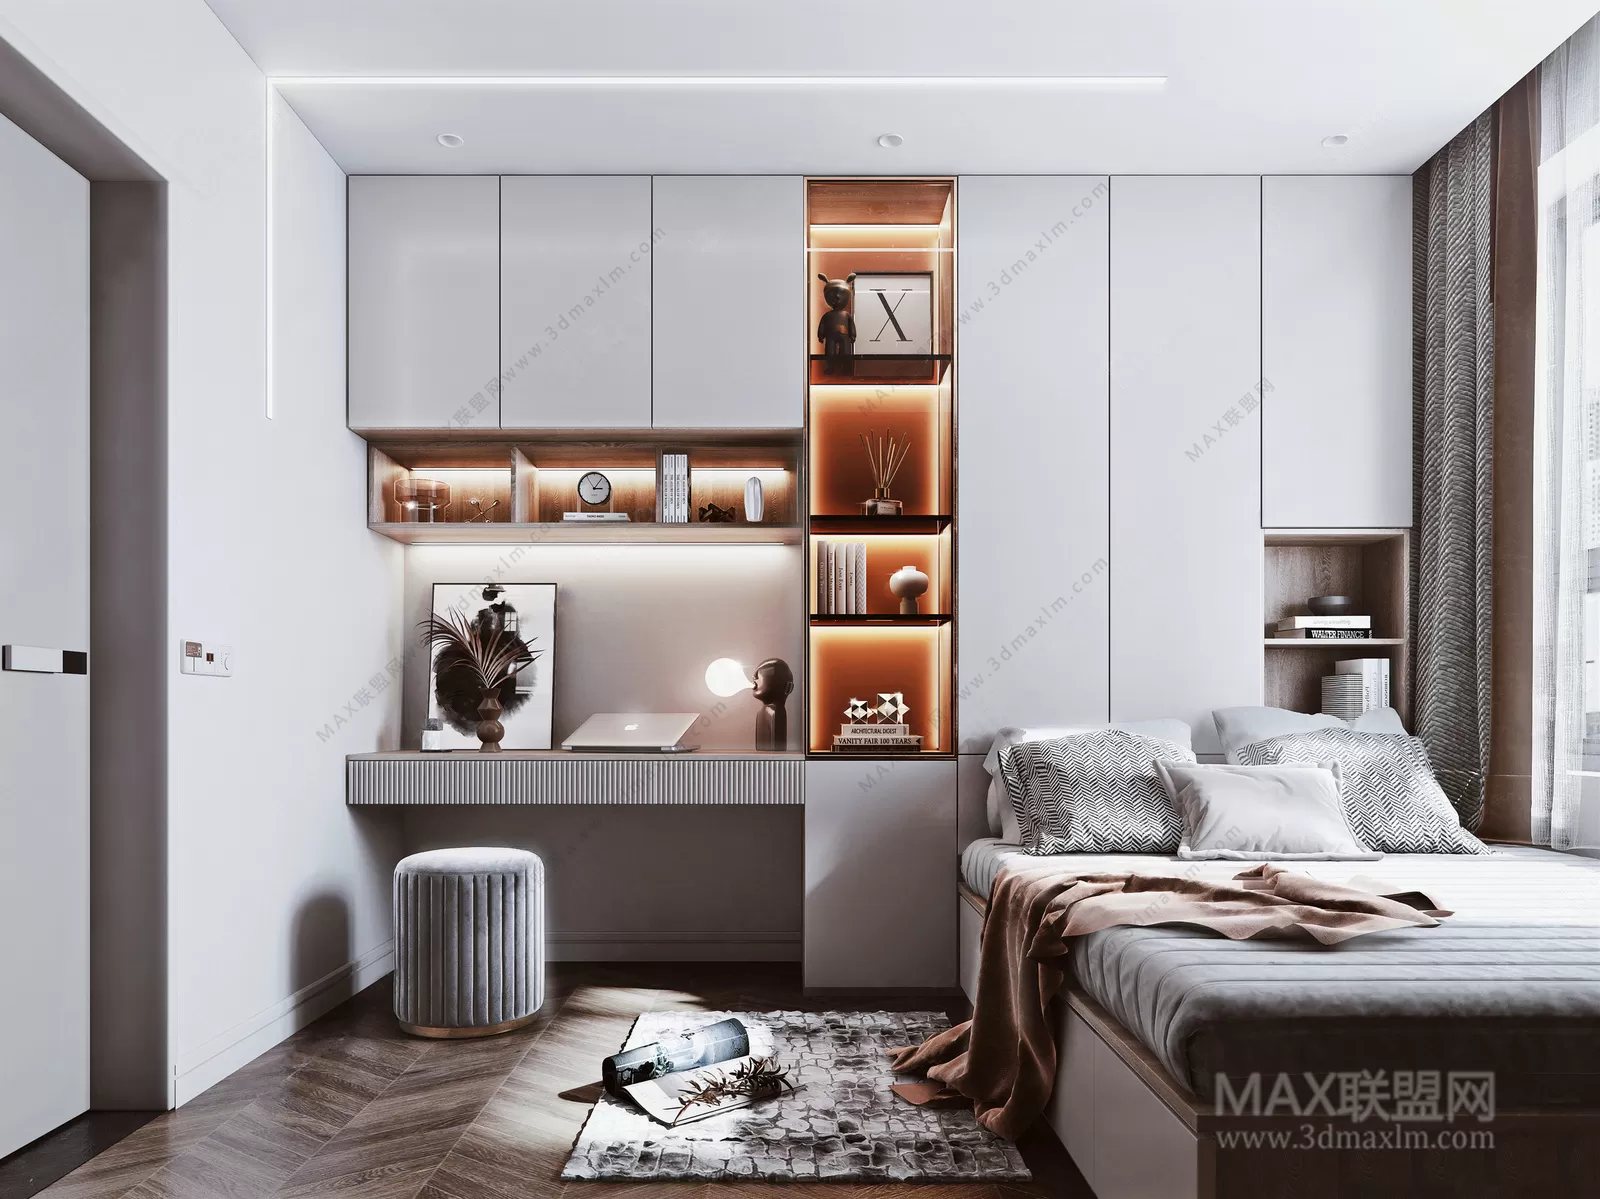 Bedroom – Interior Design – Japan Design – 001